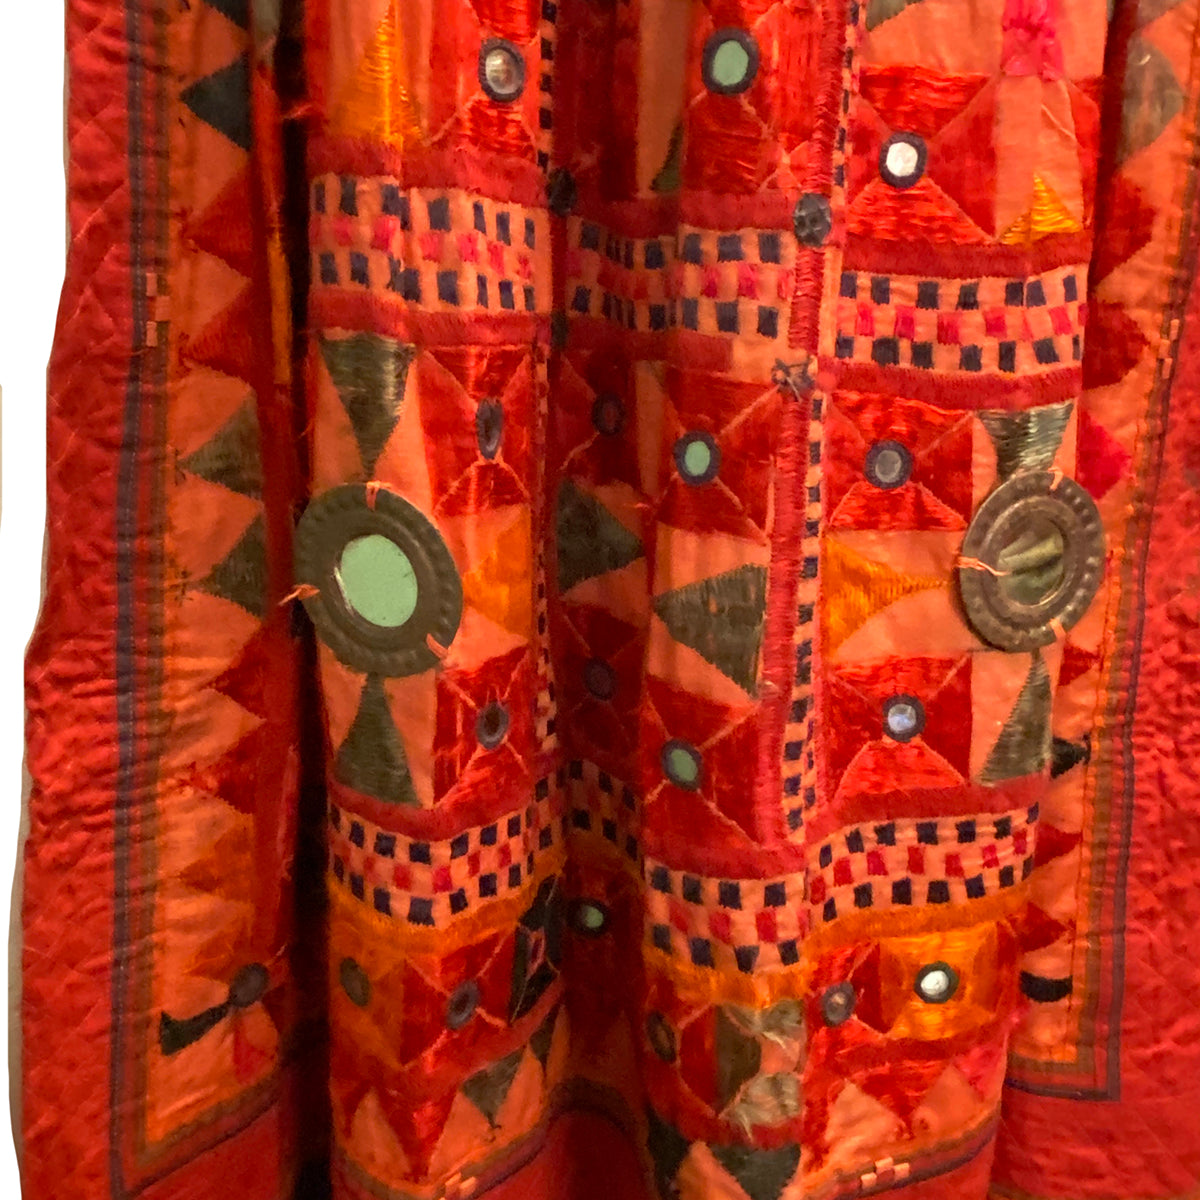 Vintage Garba Skirt 9 - Vintage India NYC